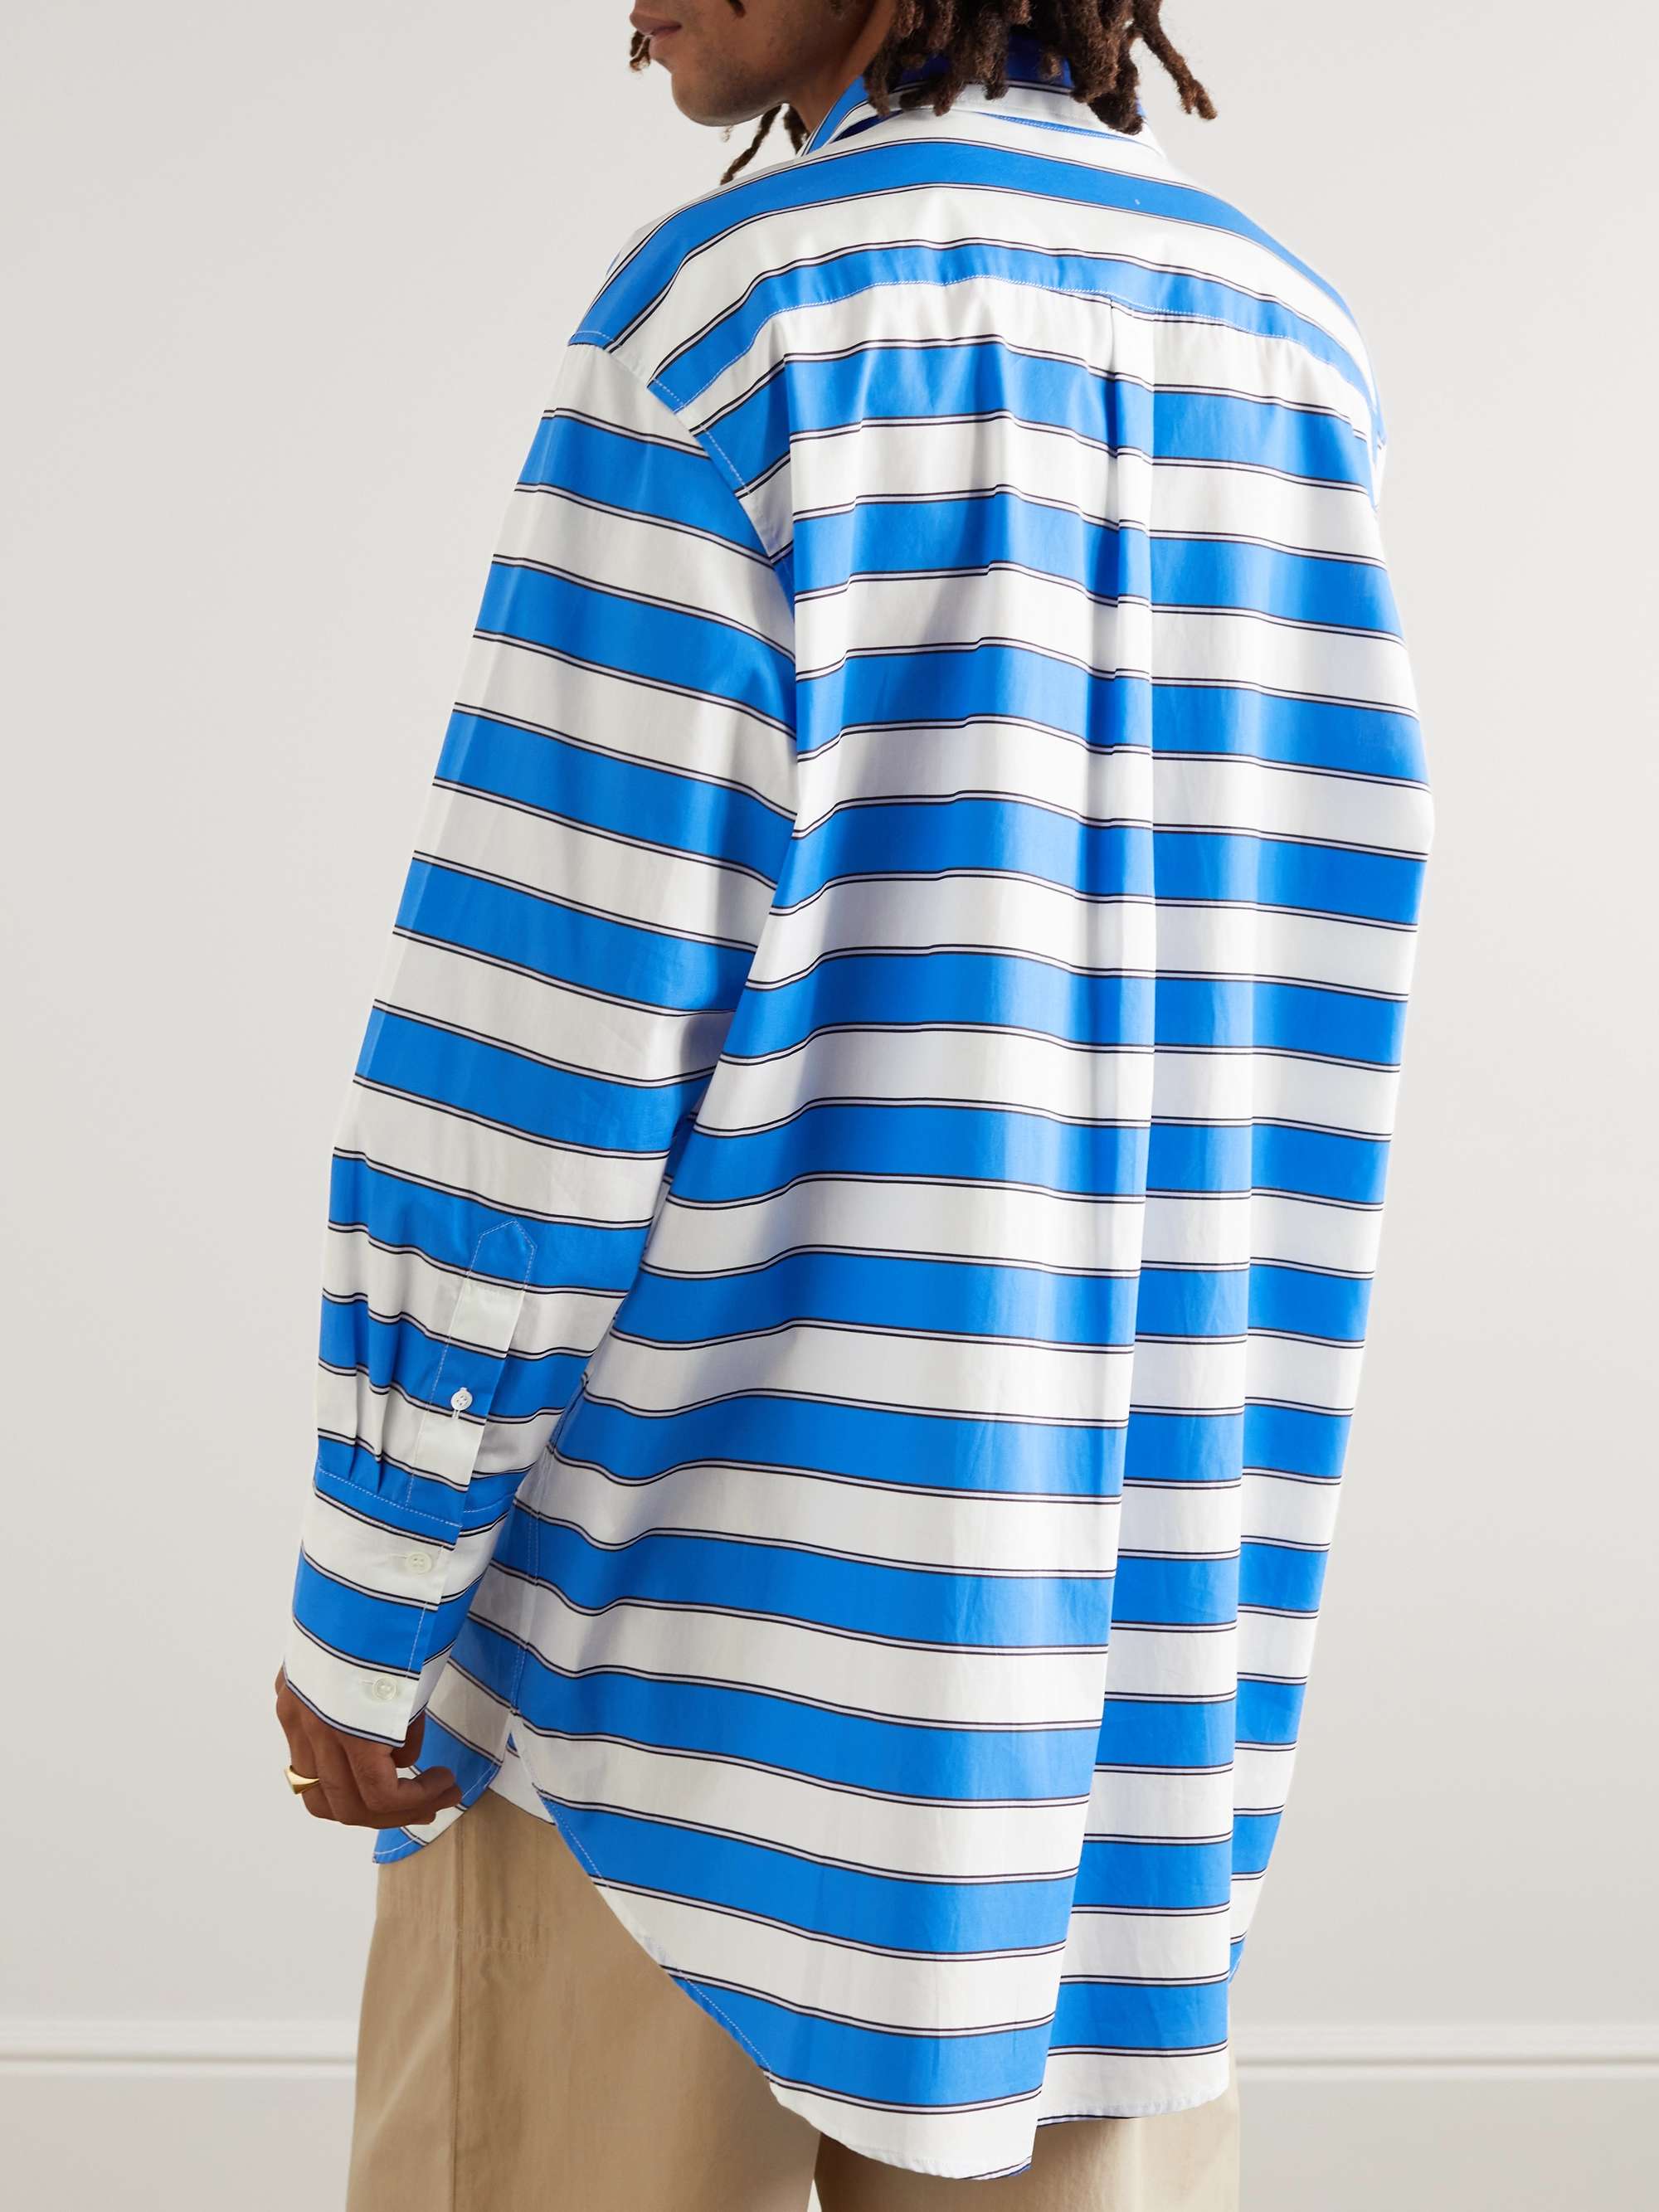 JW ANDERSON Boy With Apple Striped Printed Cotton-Poplin Shirt